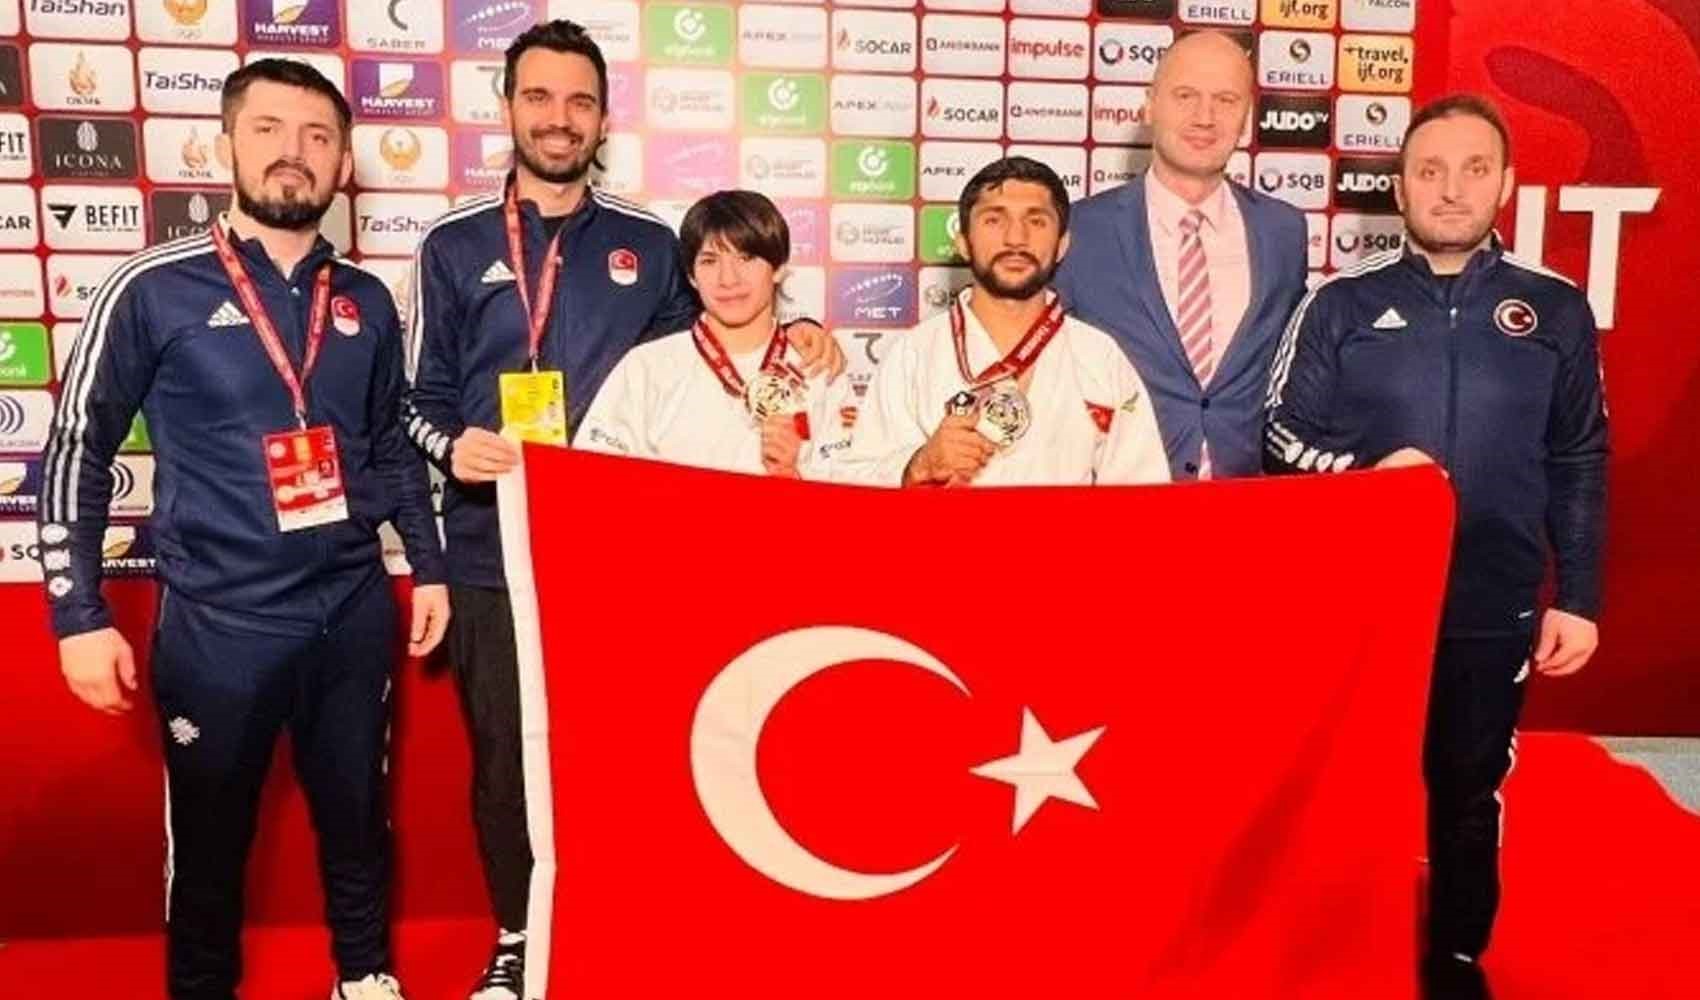 Milli judocular, Özbekistan'da 2 bronz madalya!